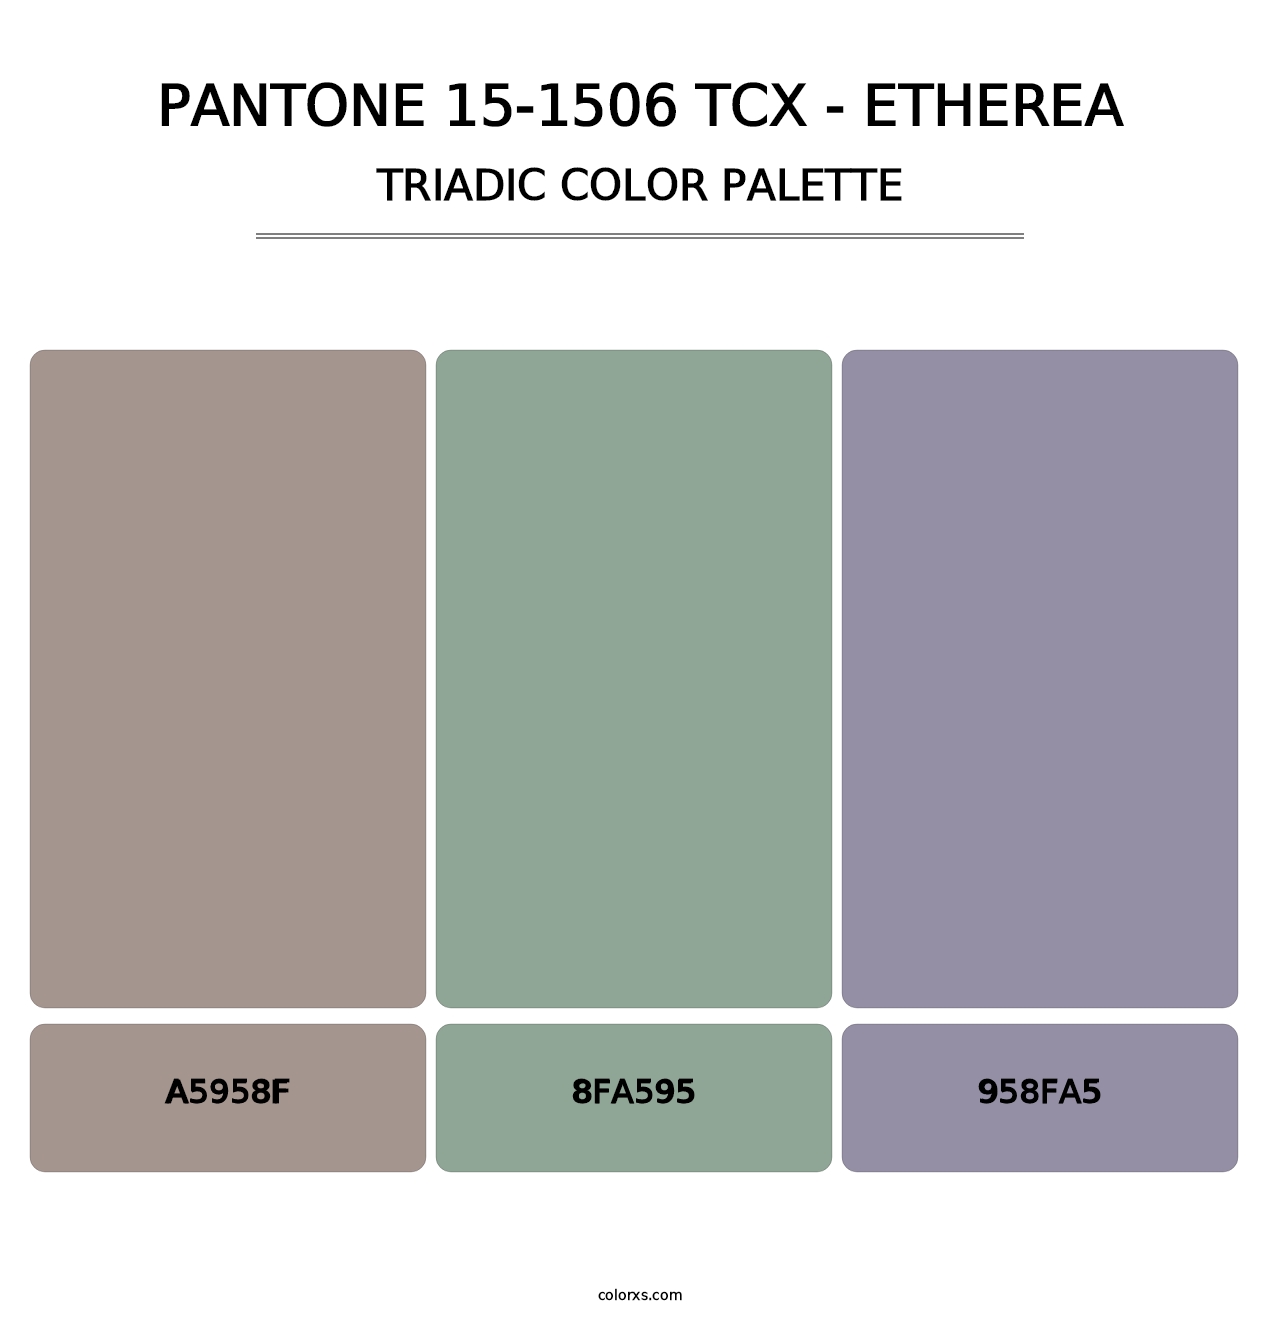 PANTONE 15-1506 TCX - Etherea - Triadic Color Palette